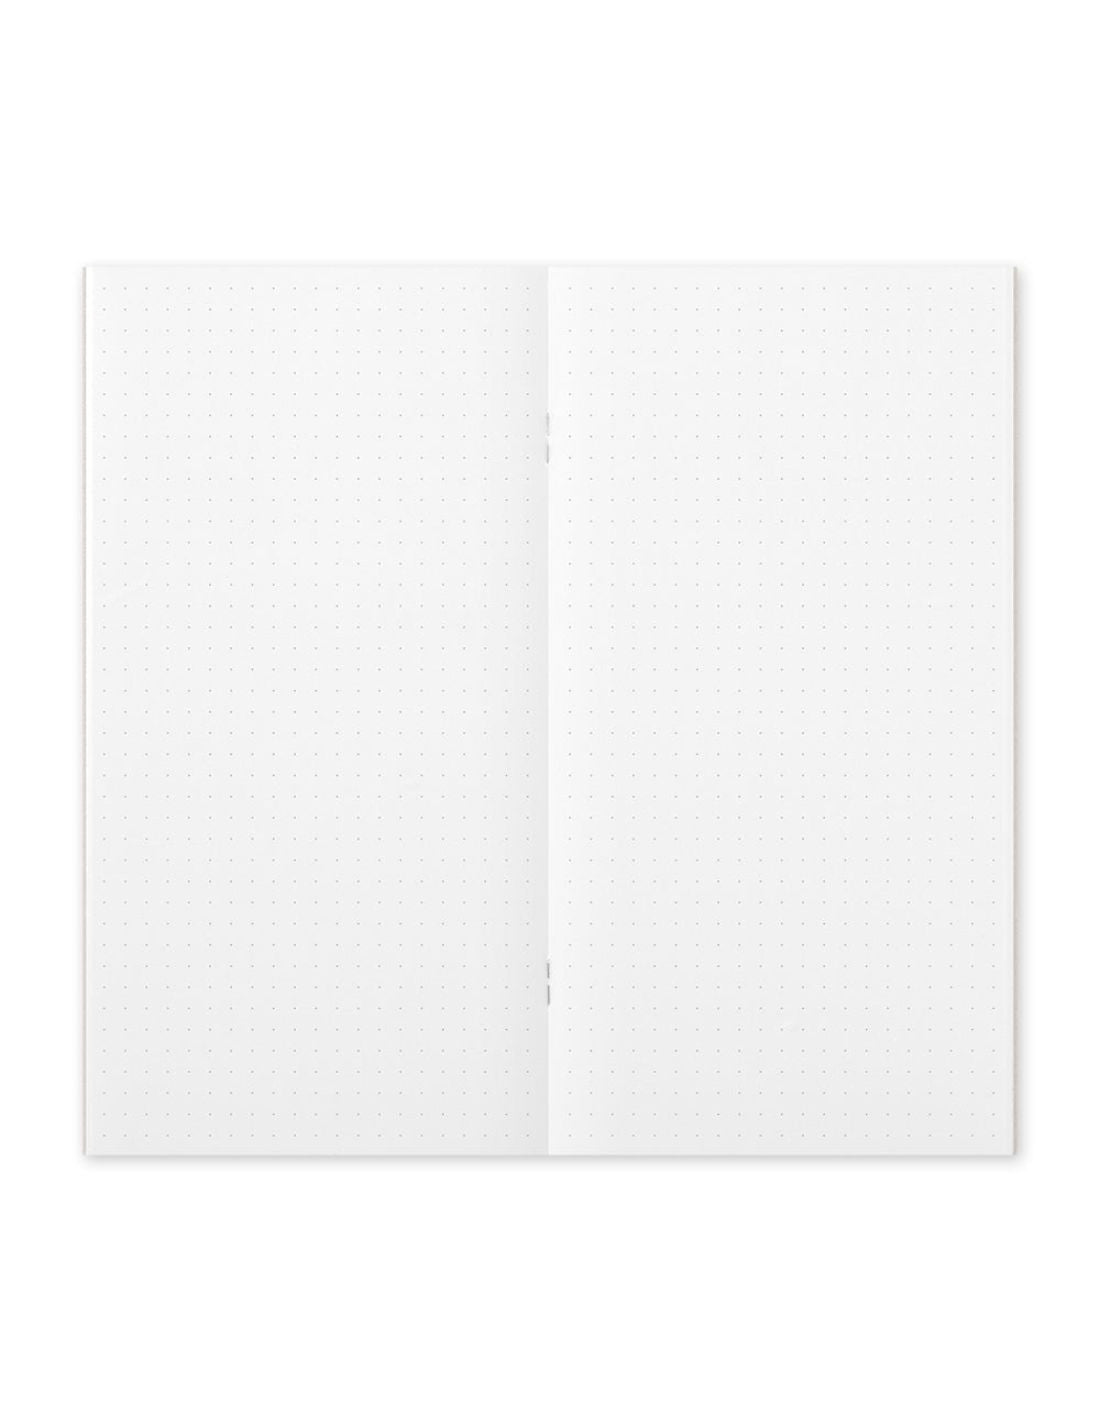 TRAVELER'S notebook 026 - carnet pages pointillées (regular size) - TN Regular size - Pointillé - 4902805144001